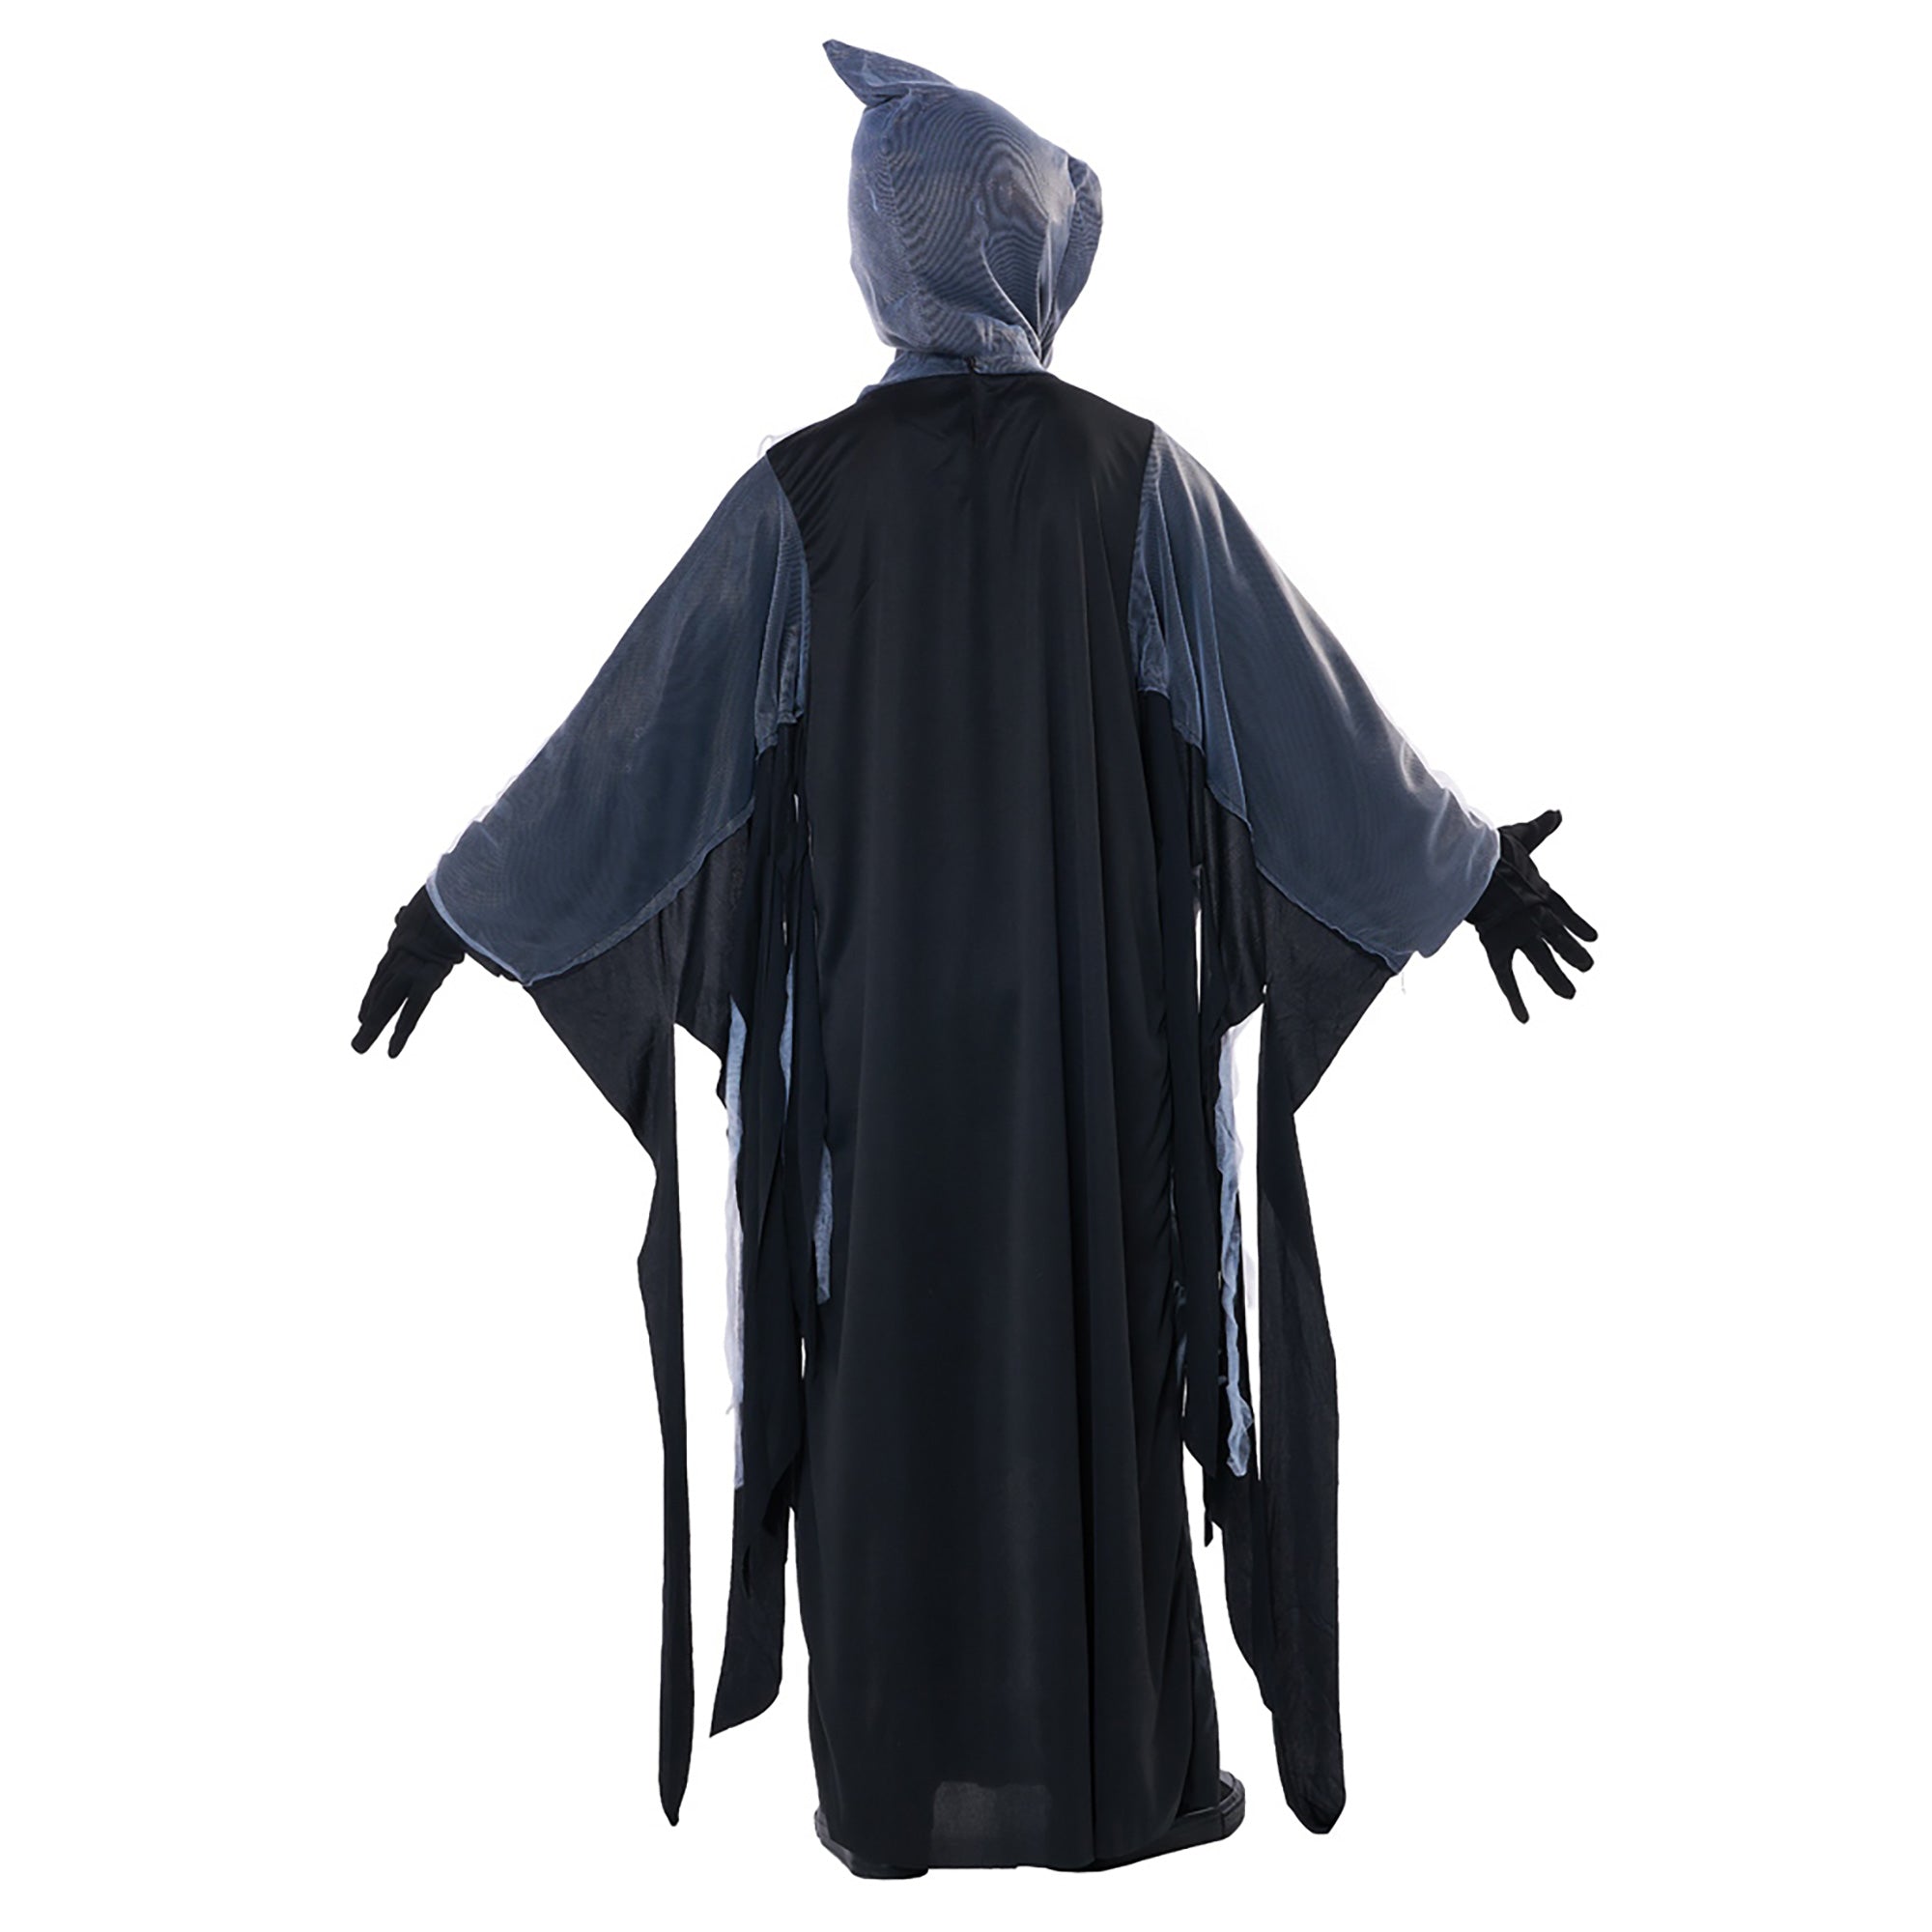 California Costumes Boys Grim Reaper Deluxe Child